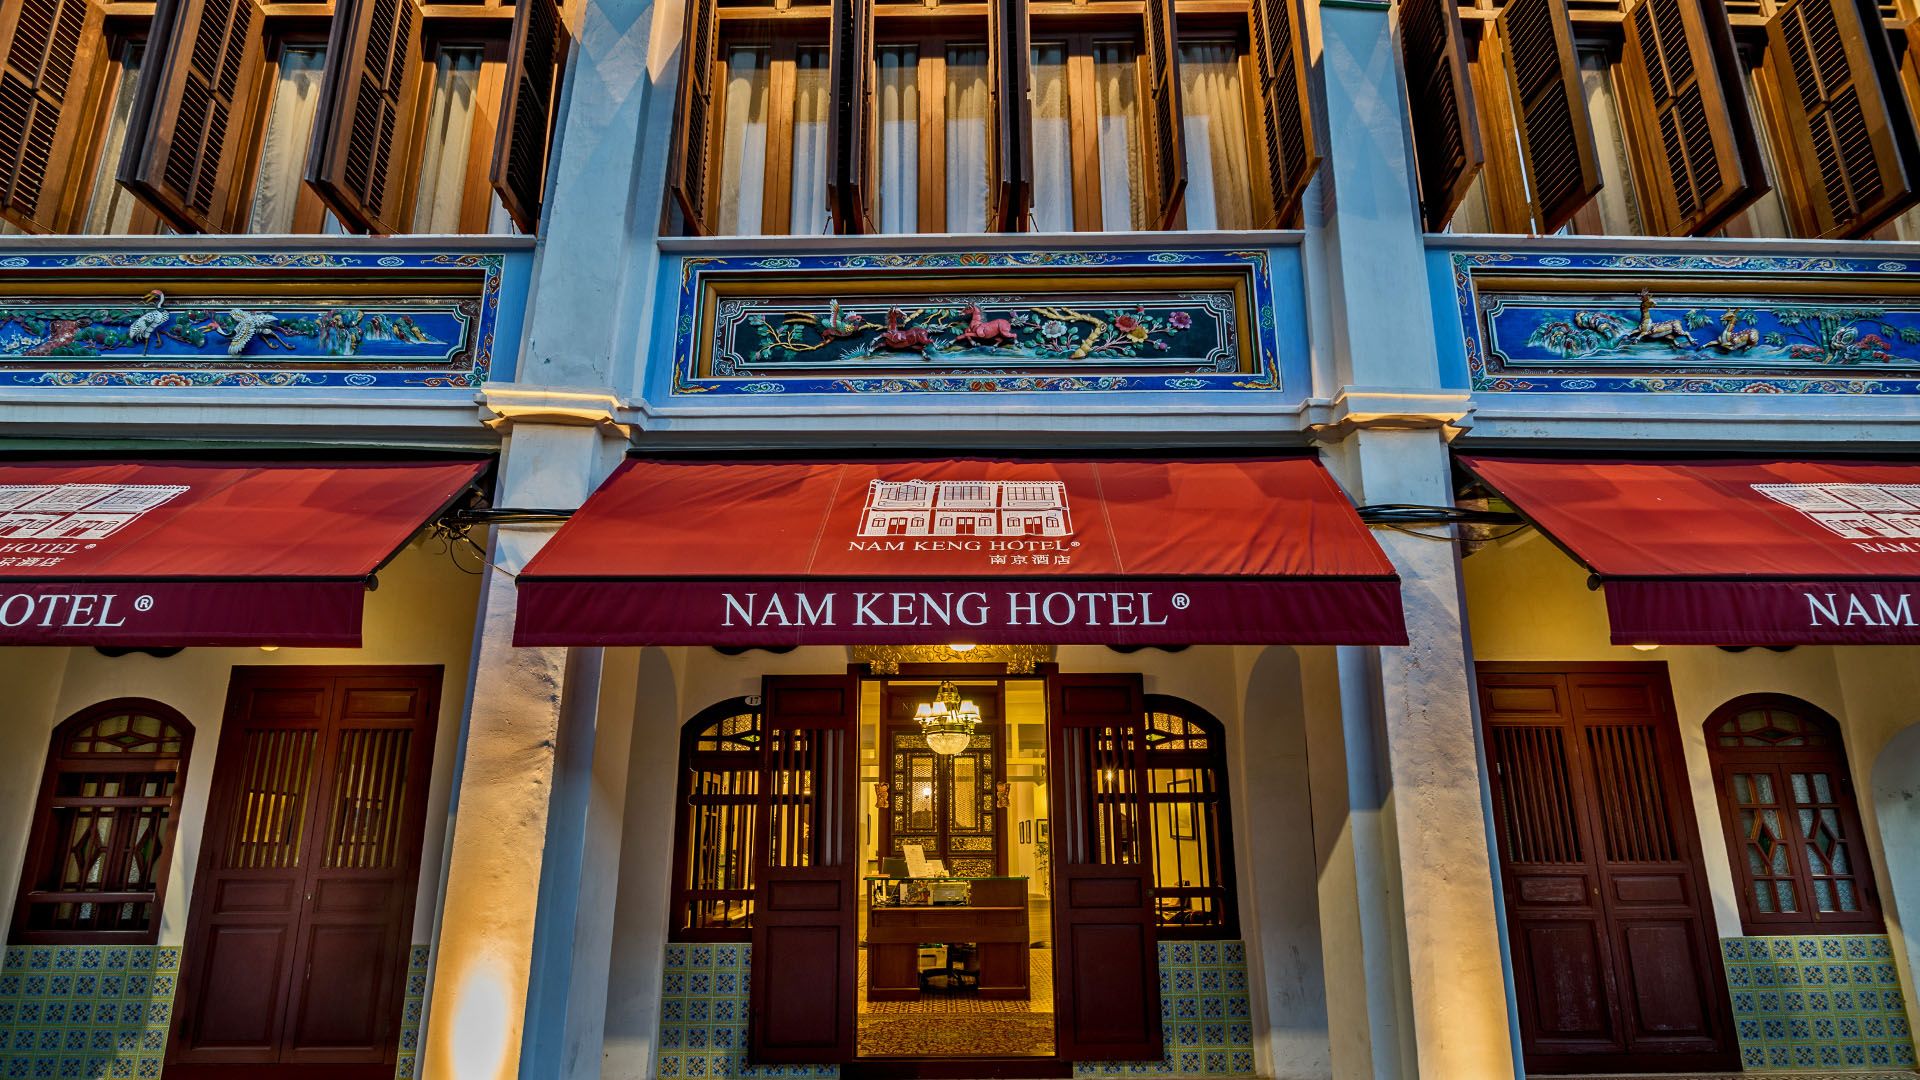 Nam Keng Hotel In City Of George Town, Penang, Malaysia - Nam Keng Hotel Penang - HD Wallpaper 